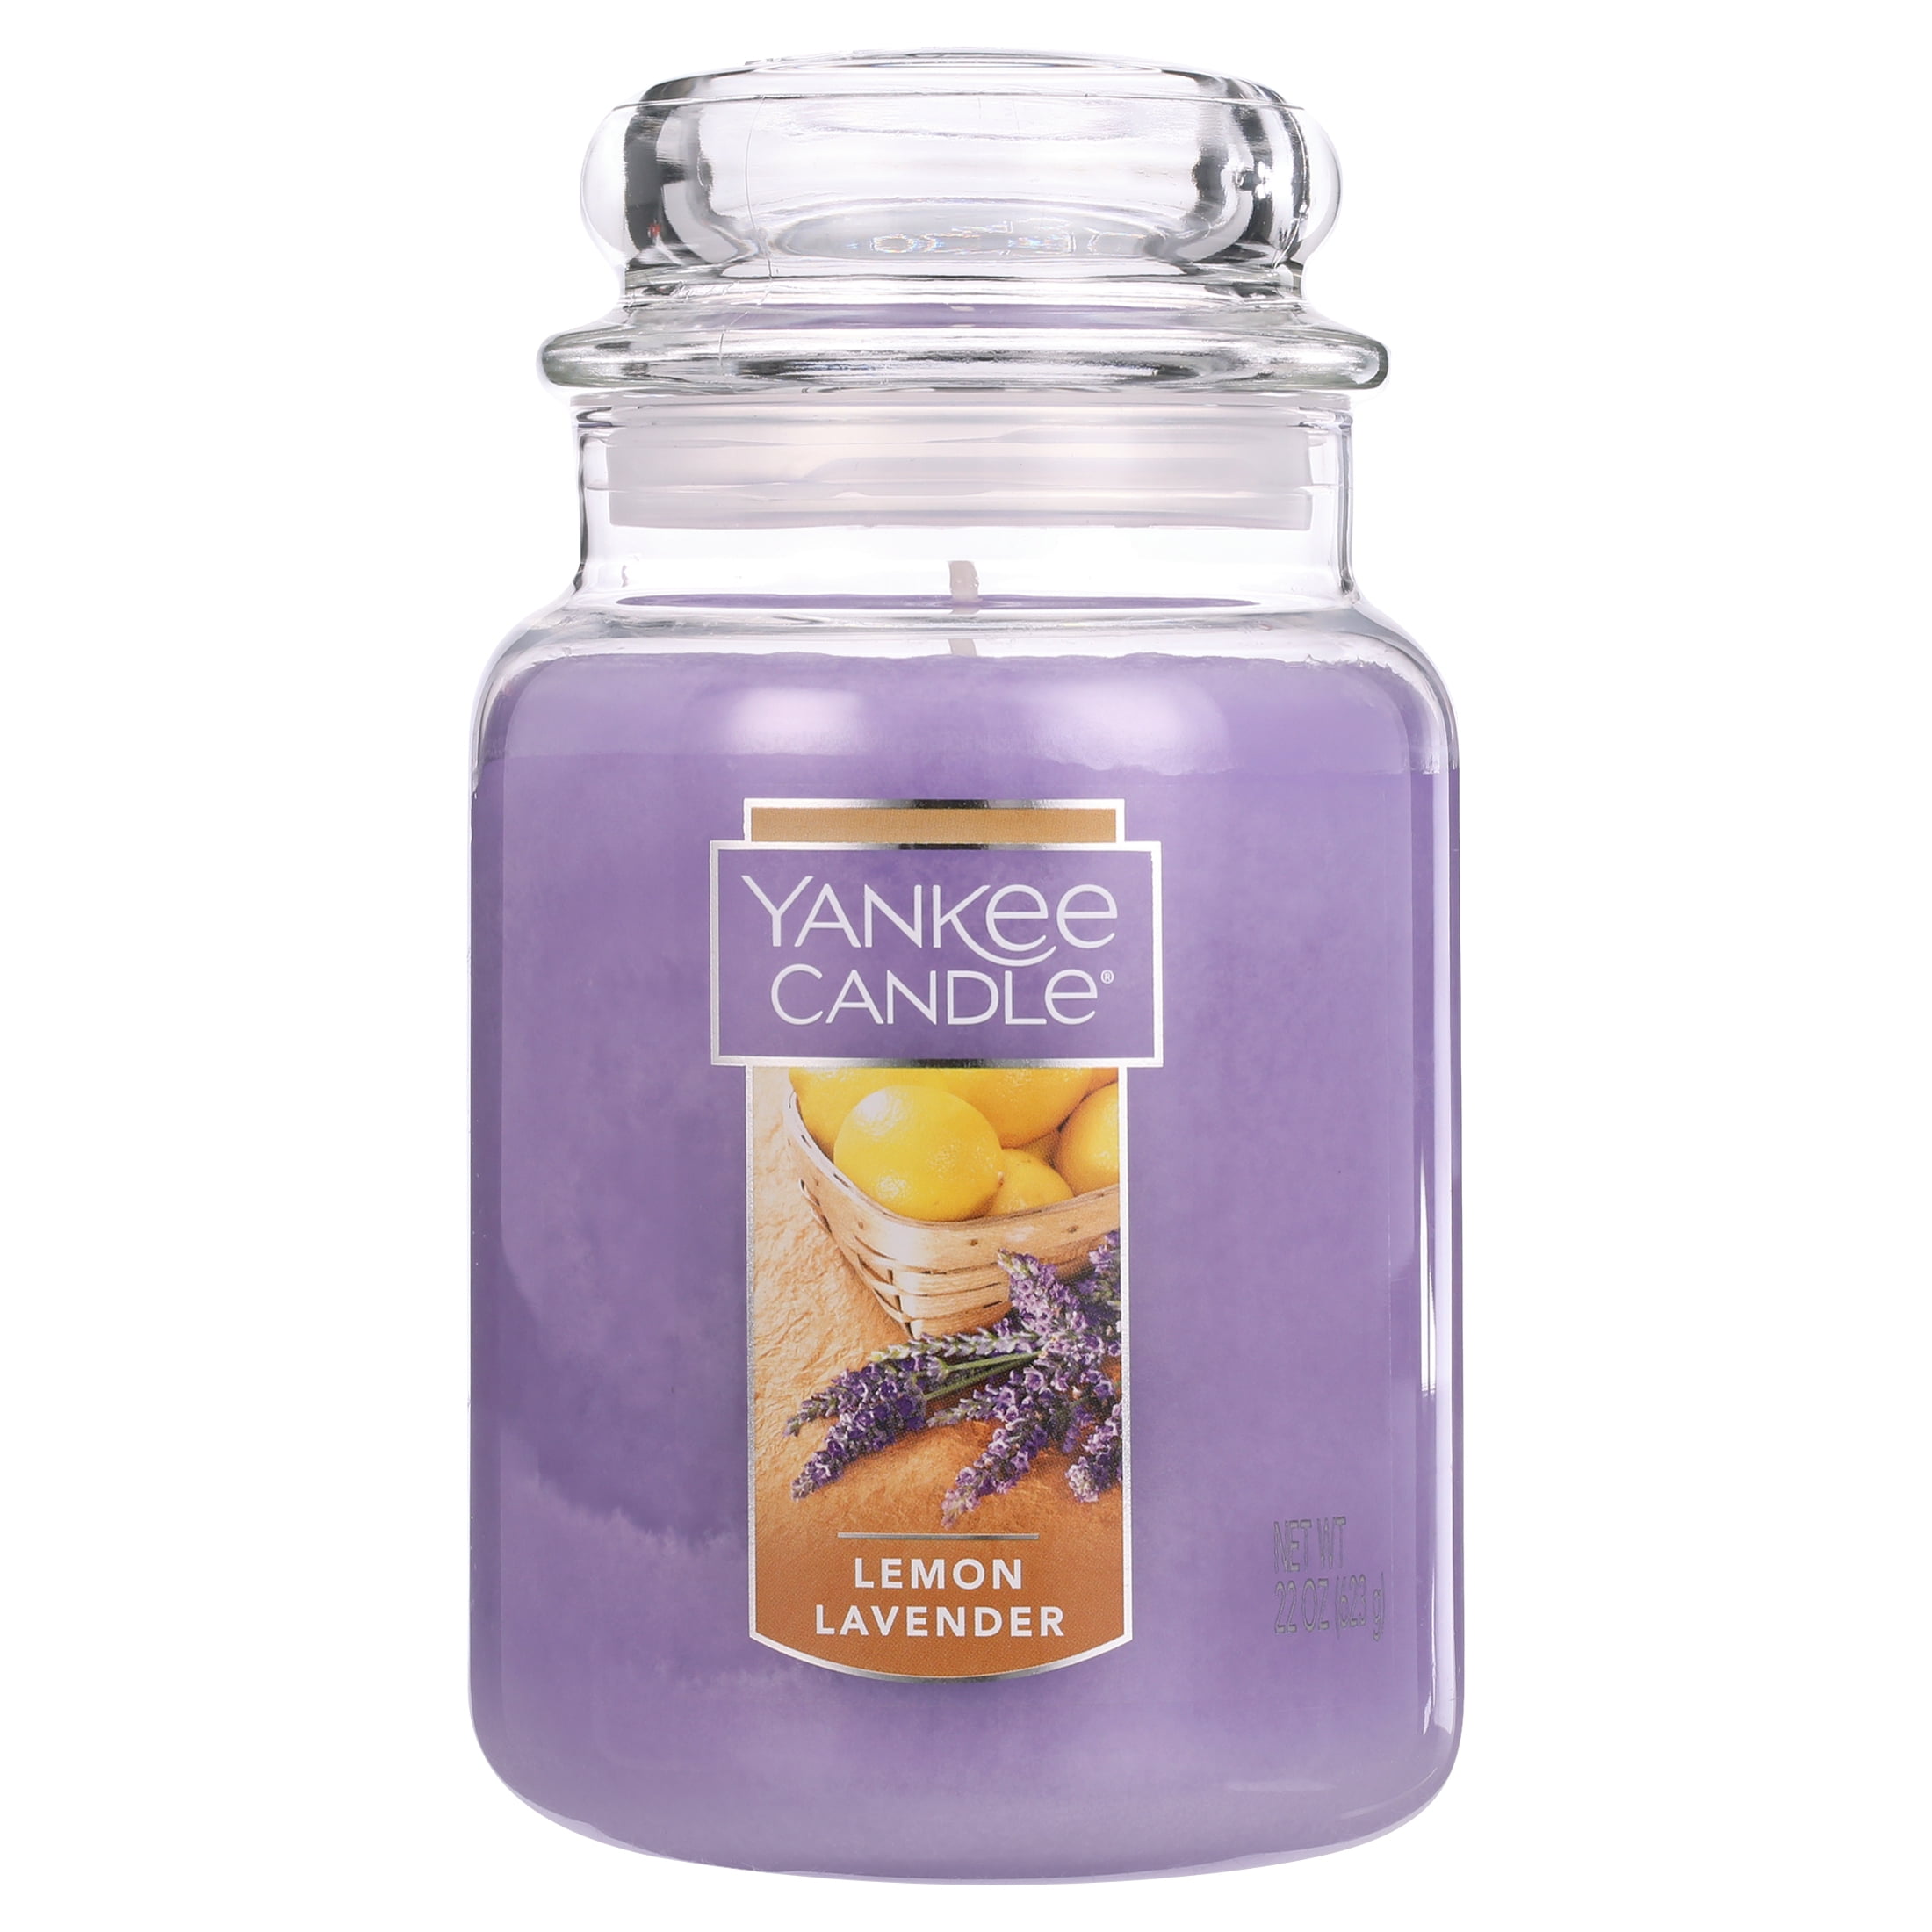 Yankee Candle Vanilla Cupcake - 22 oz Original Large Jar Scented Candle 